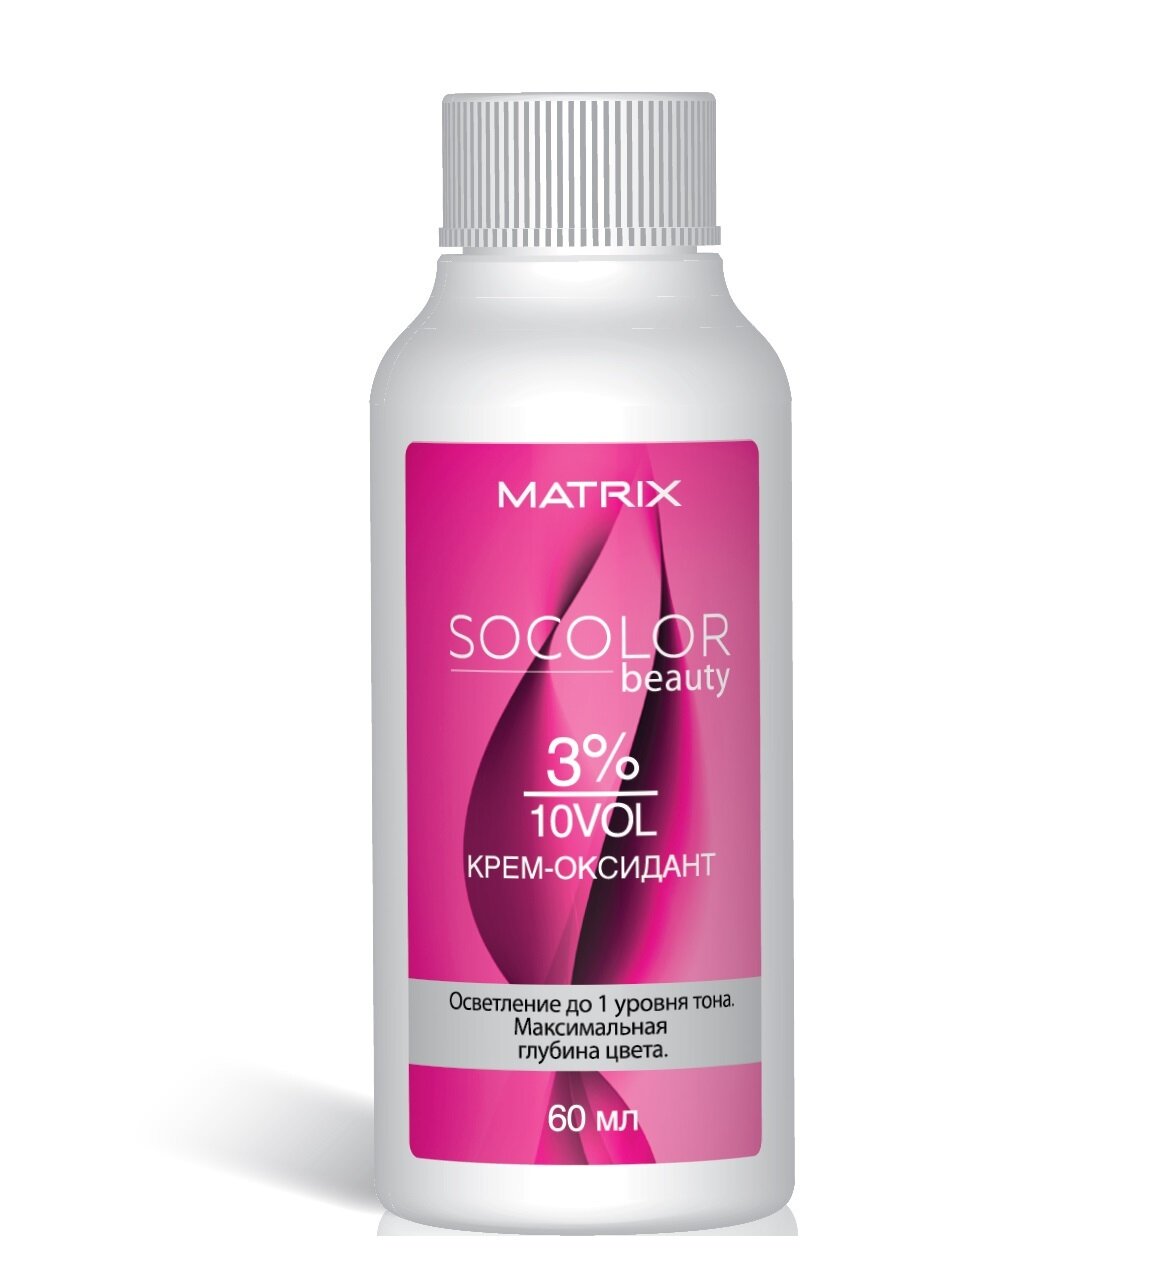 Matrix Крем-оксидант Socolor.beauty, 3% 10 Vol, 60 мл